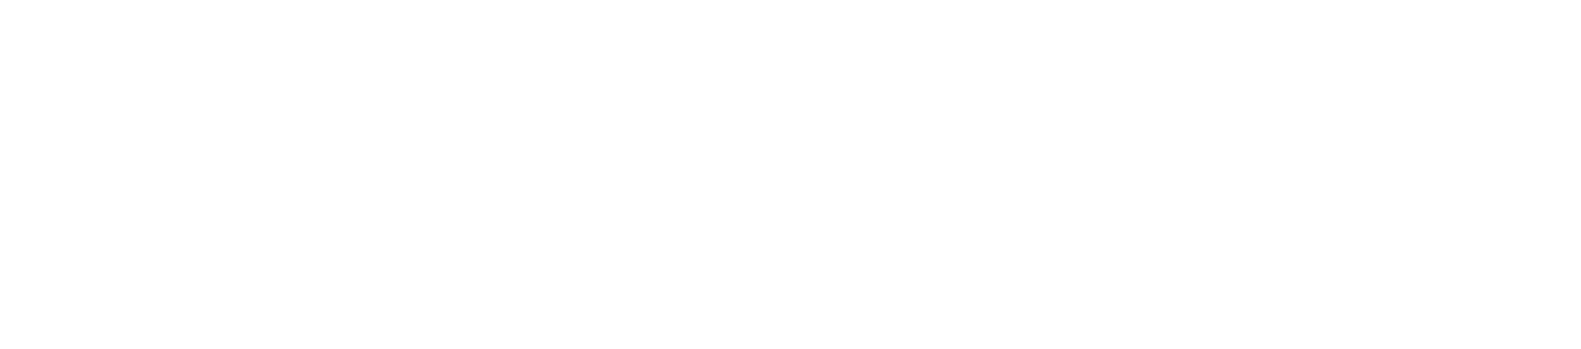 Shin-Etsu Chemical logo large for dark backgrounds (transparent PNG)